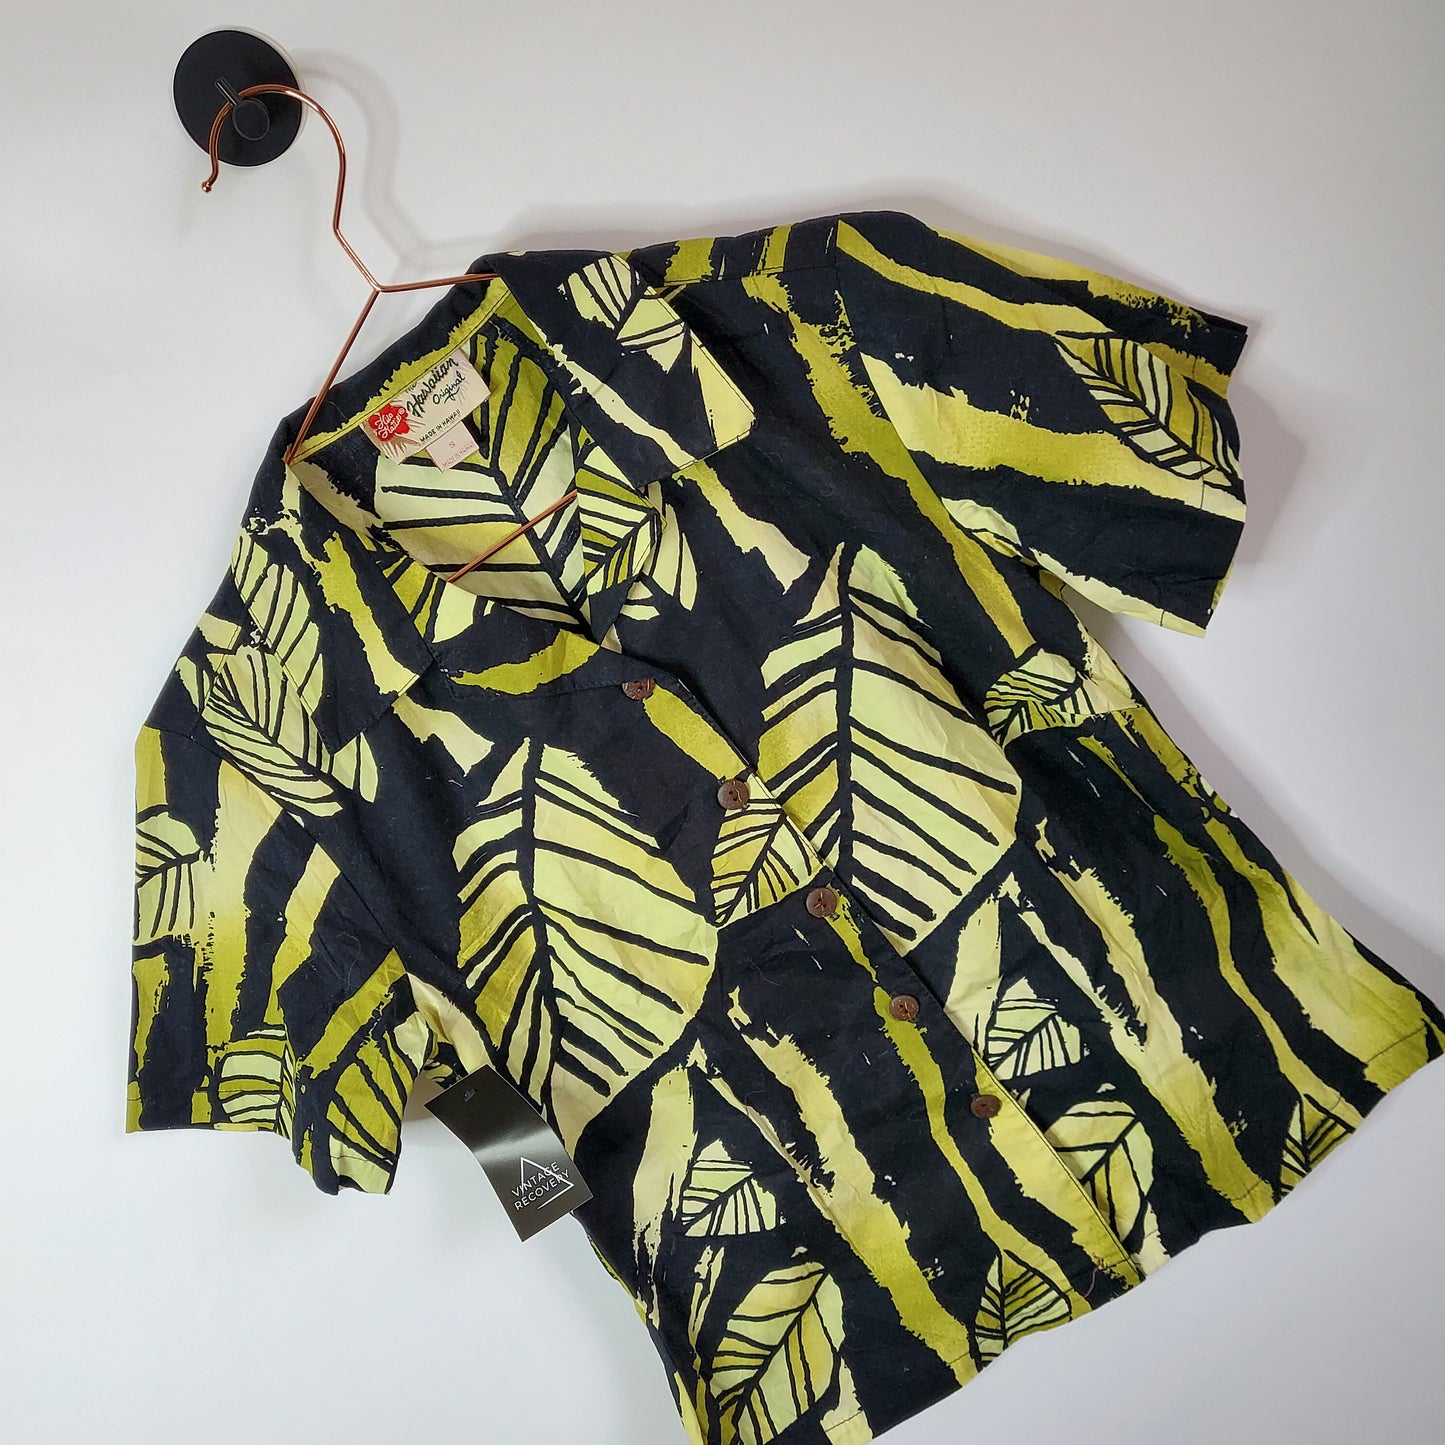 Vintage 80's Palm Tree Hawaiian Shirt  Green and Black Size Small